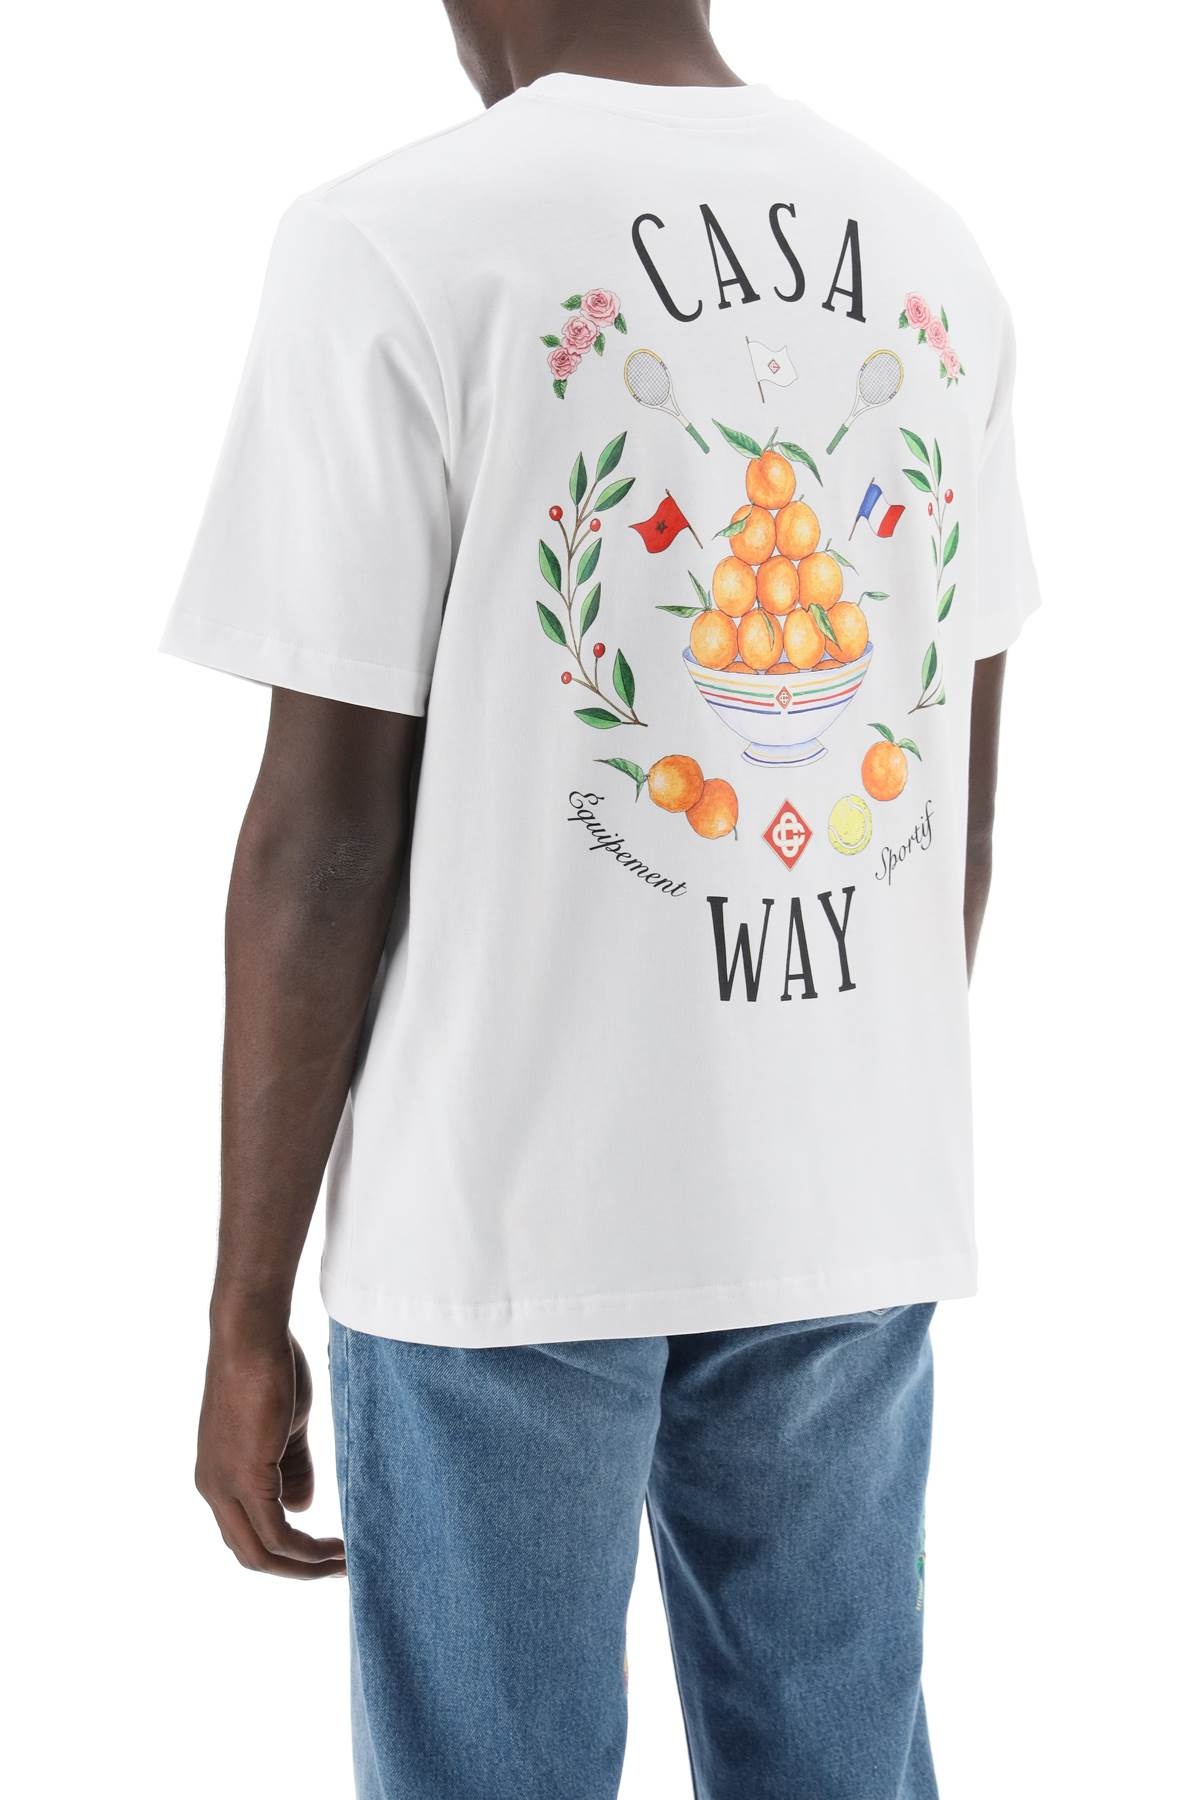 Casablanca Casa Way Crew-Neck T-Shirt Men - 3